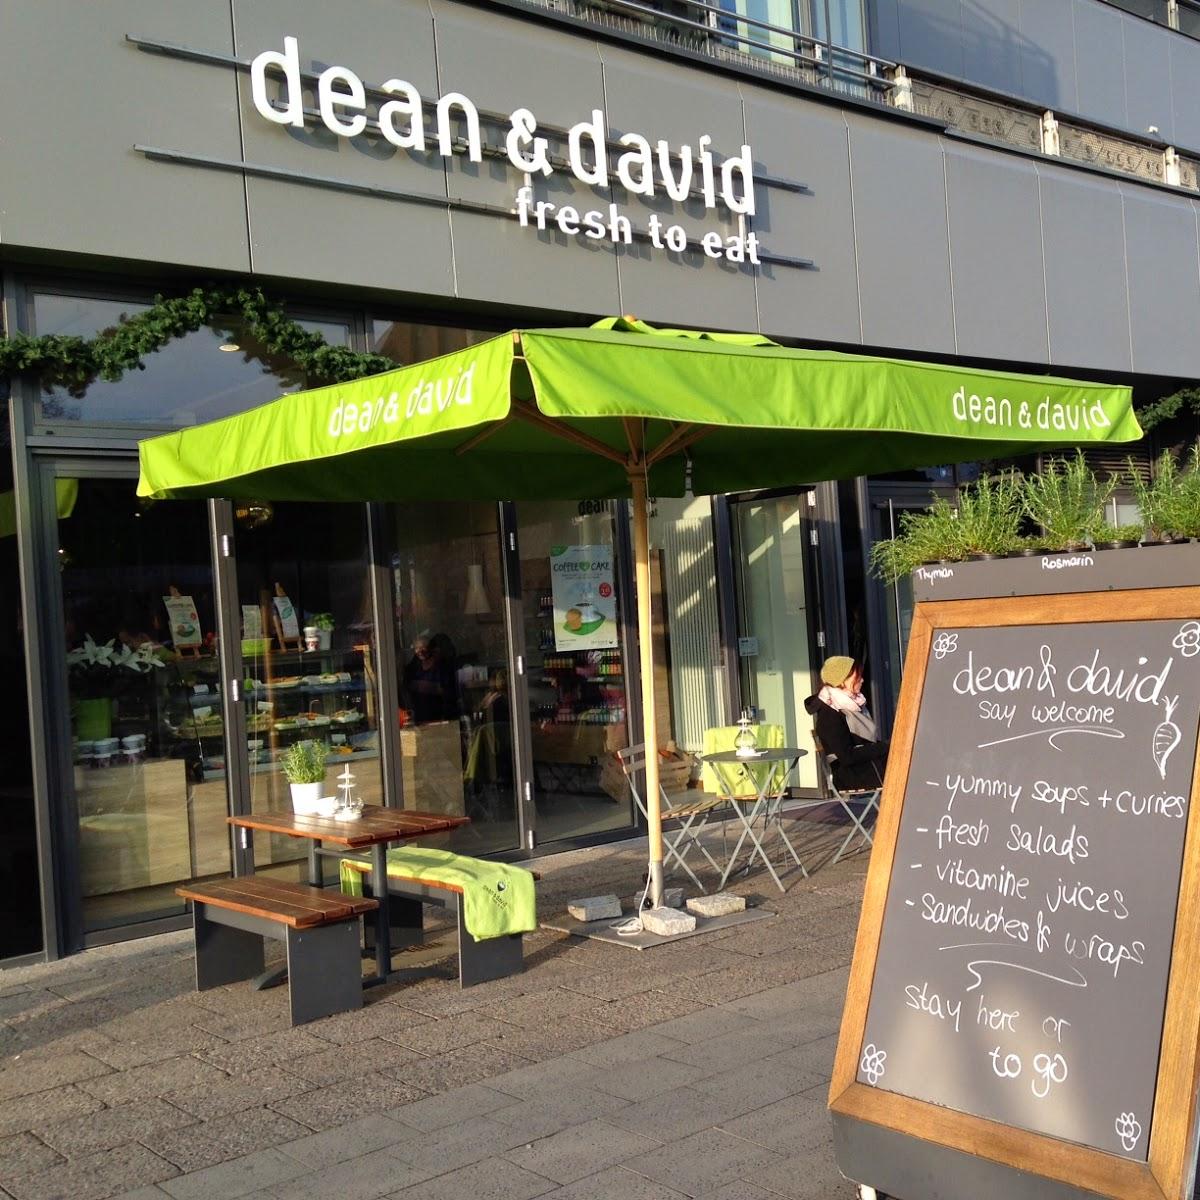 Restaurant "dean&david" in Berlin